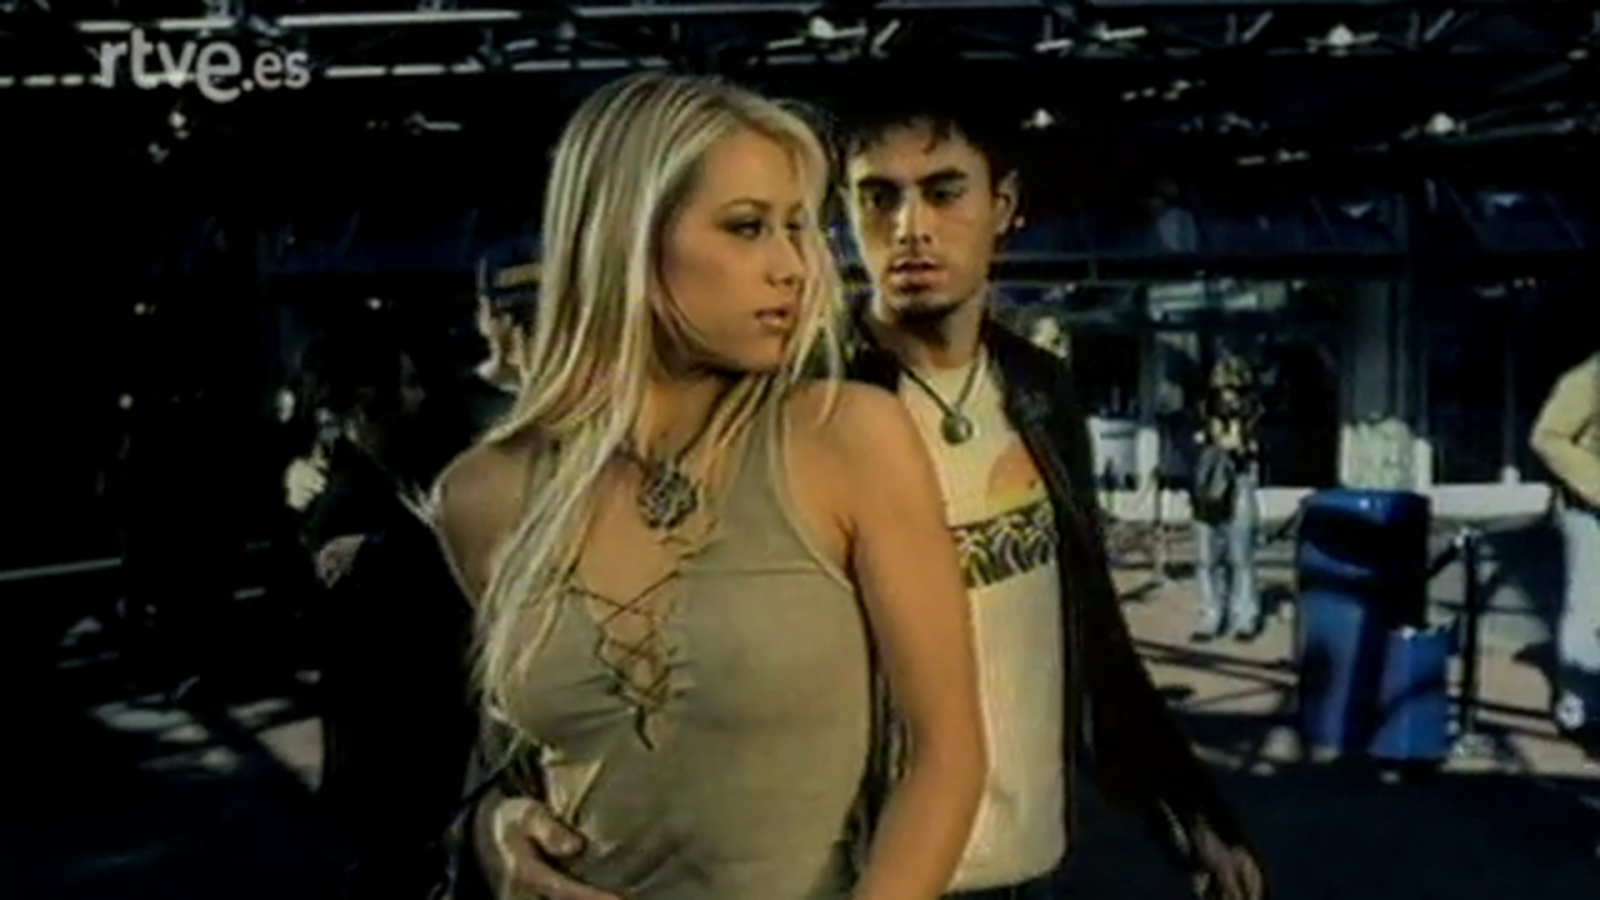 Corazón corazón - Enrique Iglesias y Anna Kournikova - 14/9/2003